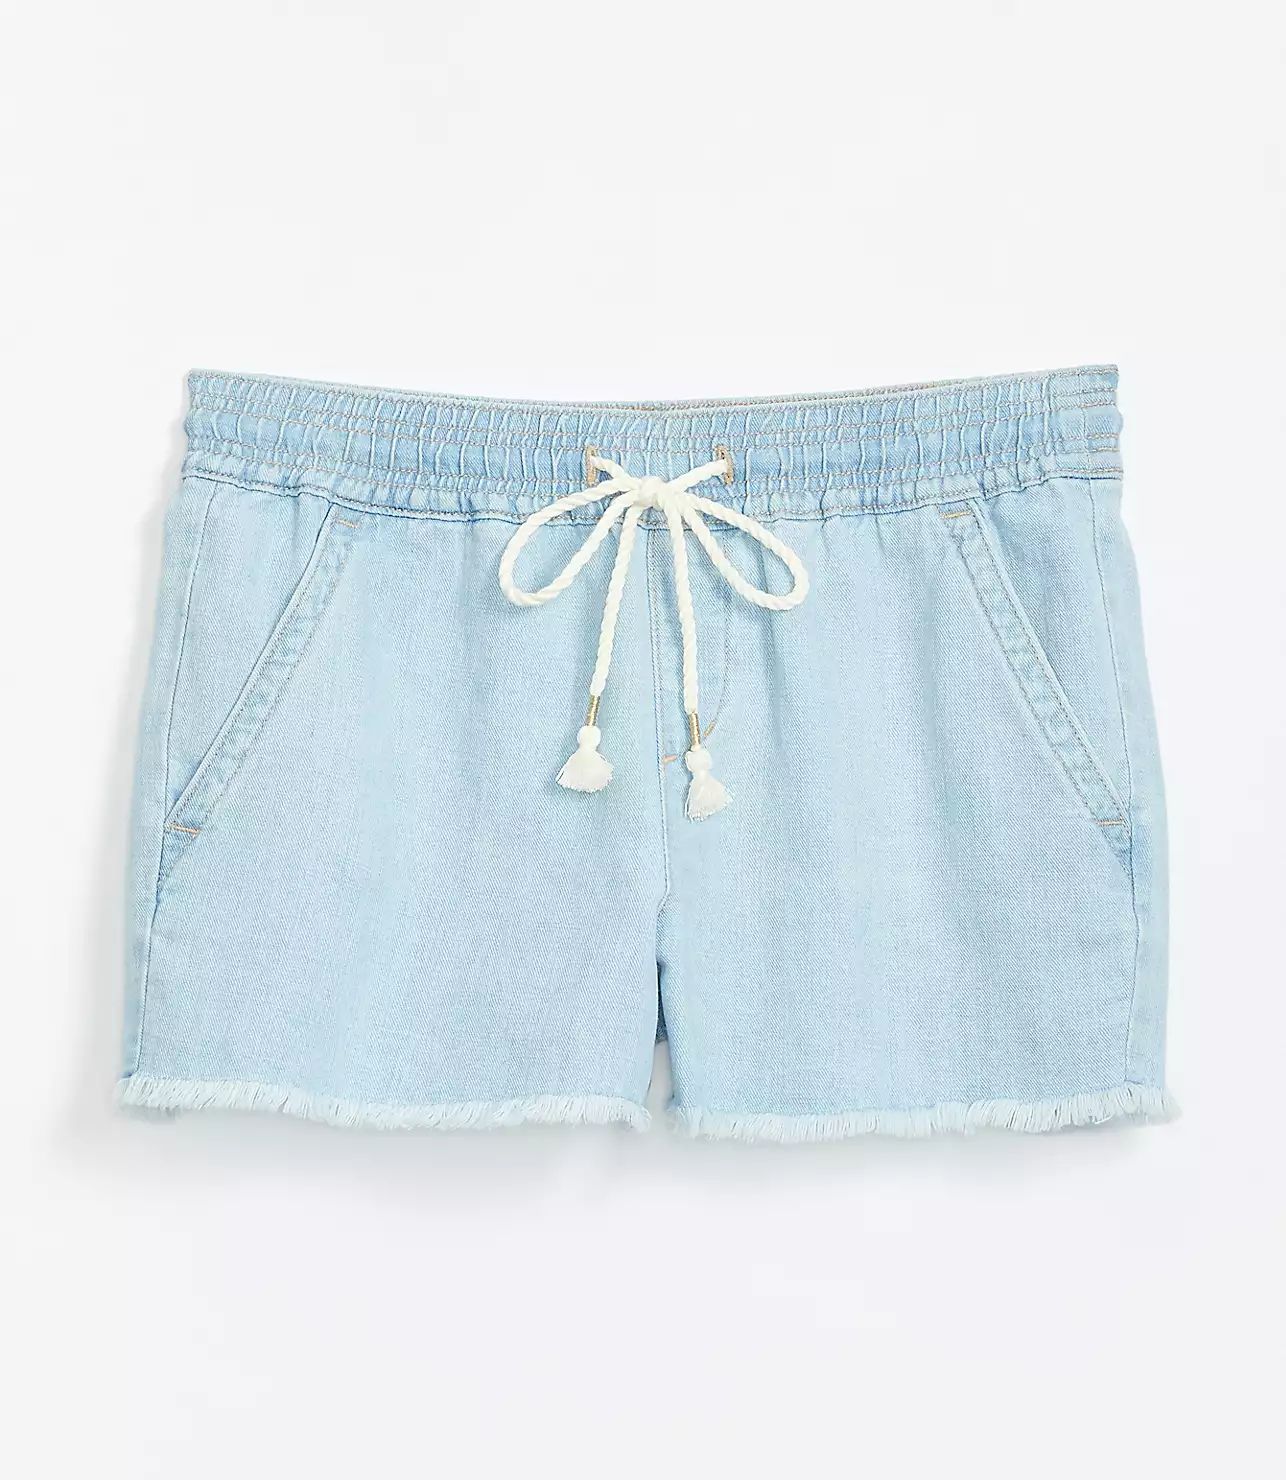 Cotton Linen Denim Pull On Shorts in Light Indigo Wash | LOFT